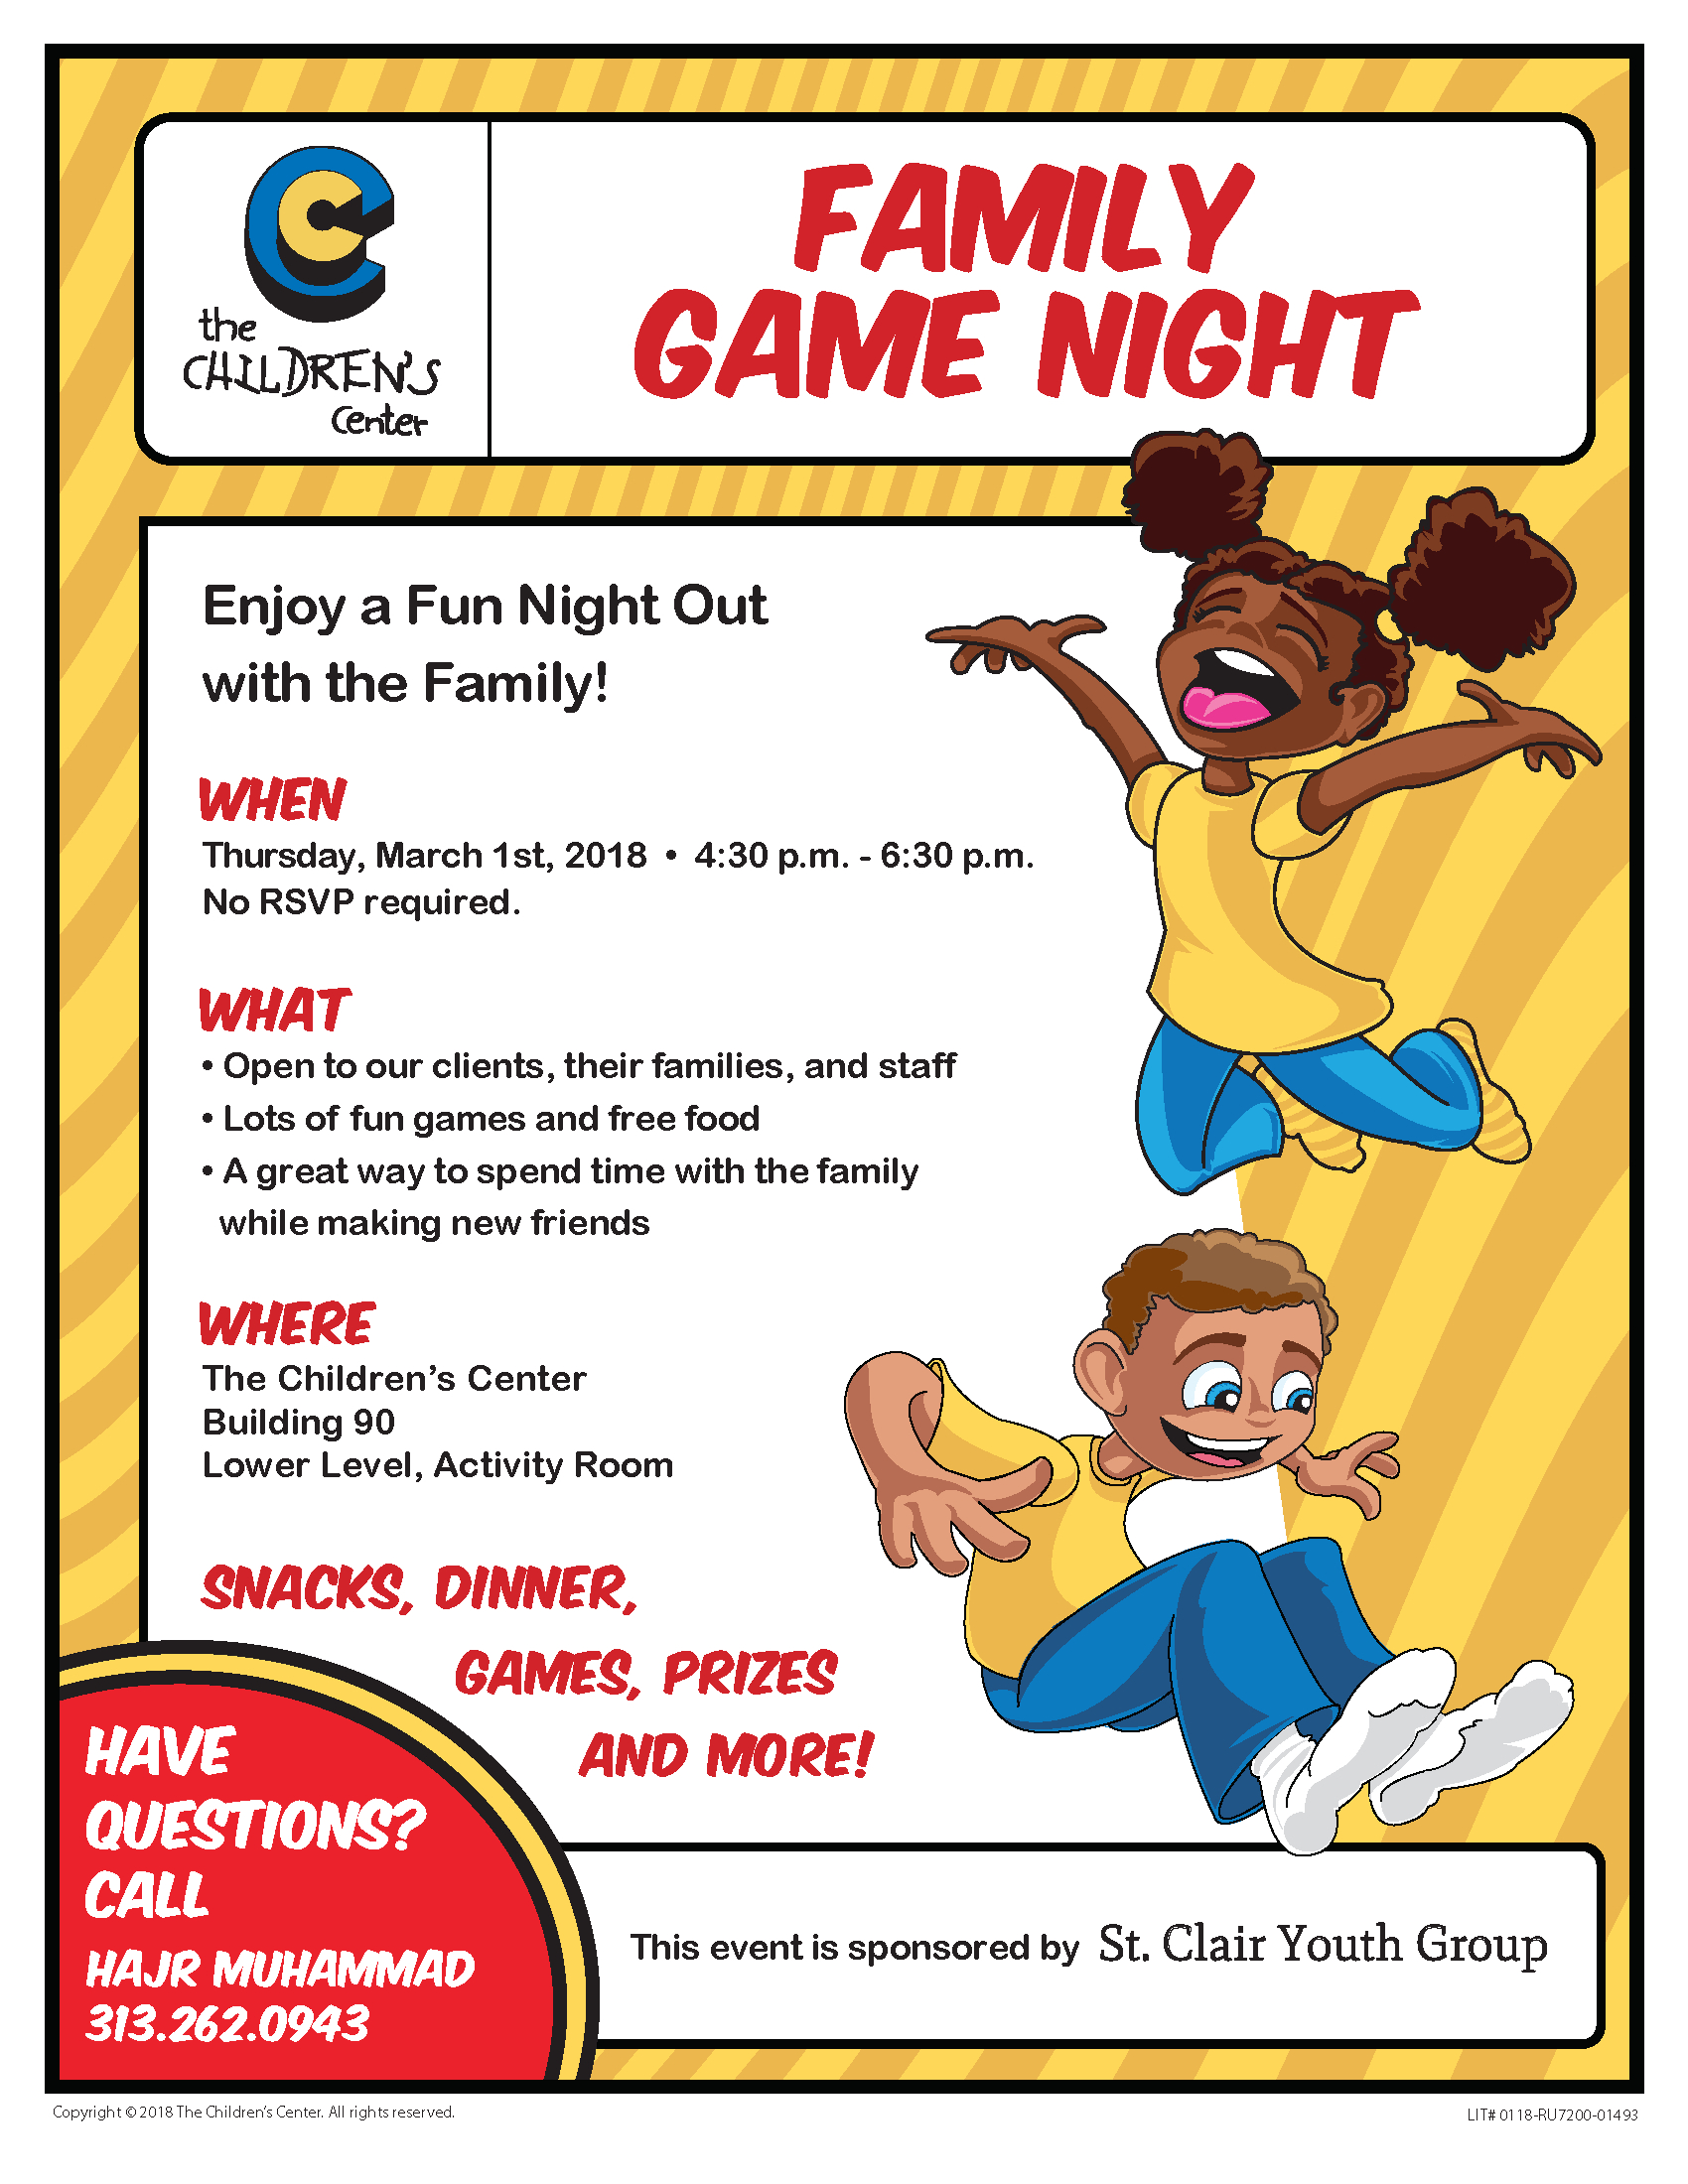 Family Game Night | The Children's Center Regarding Game Night Flyer Template